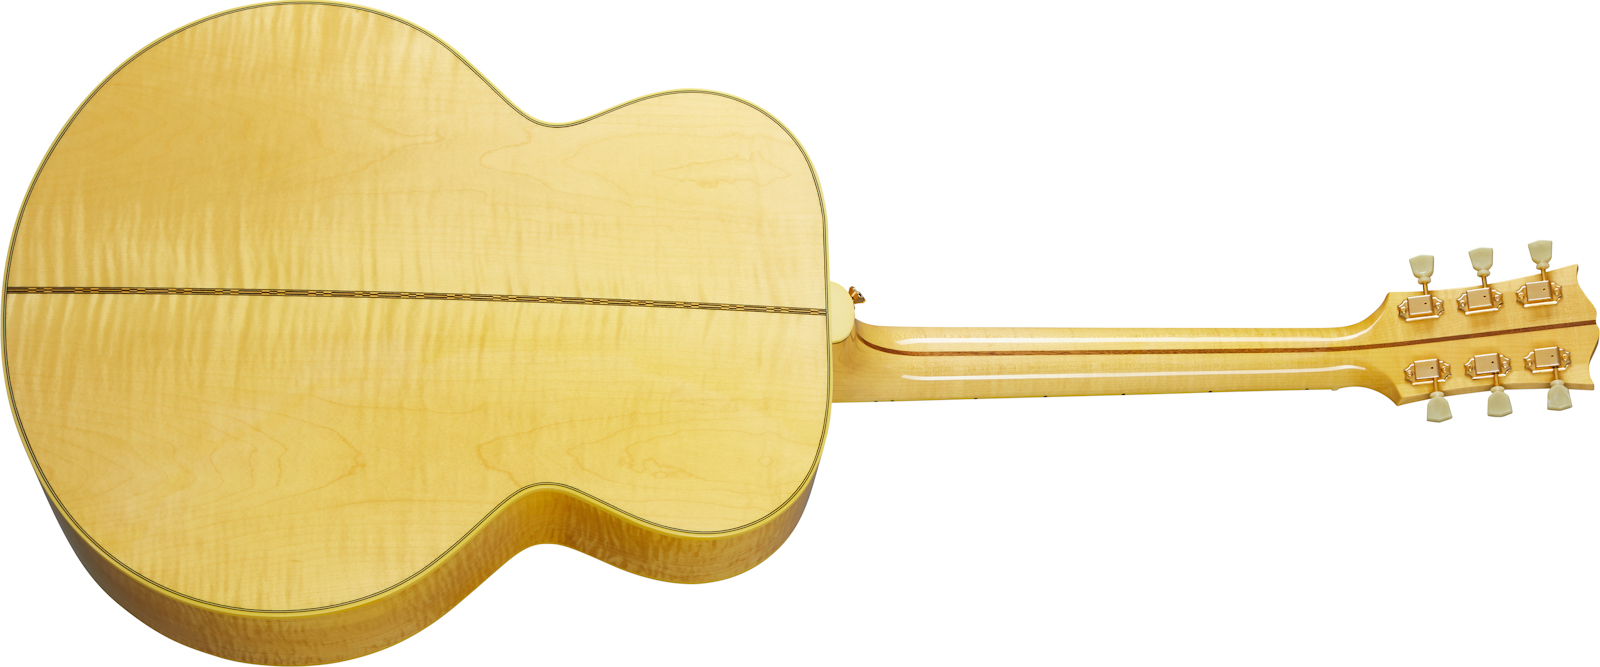 Gibson Sj-200 Original 2020 Super Jumbo Epicea Erable Rw - Antique Natural - Guitare Electro Acoustique - Variation 1